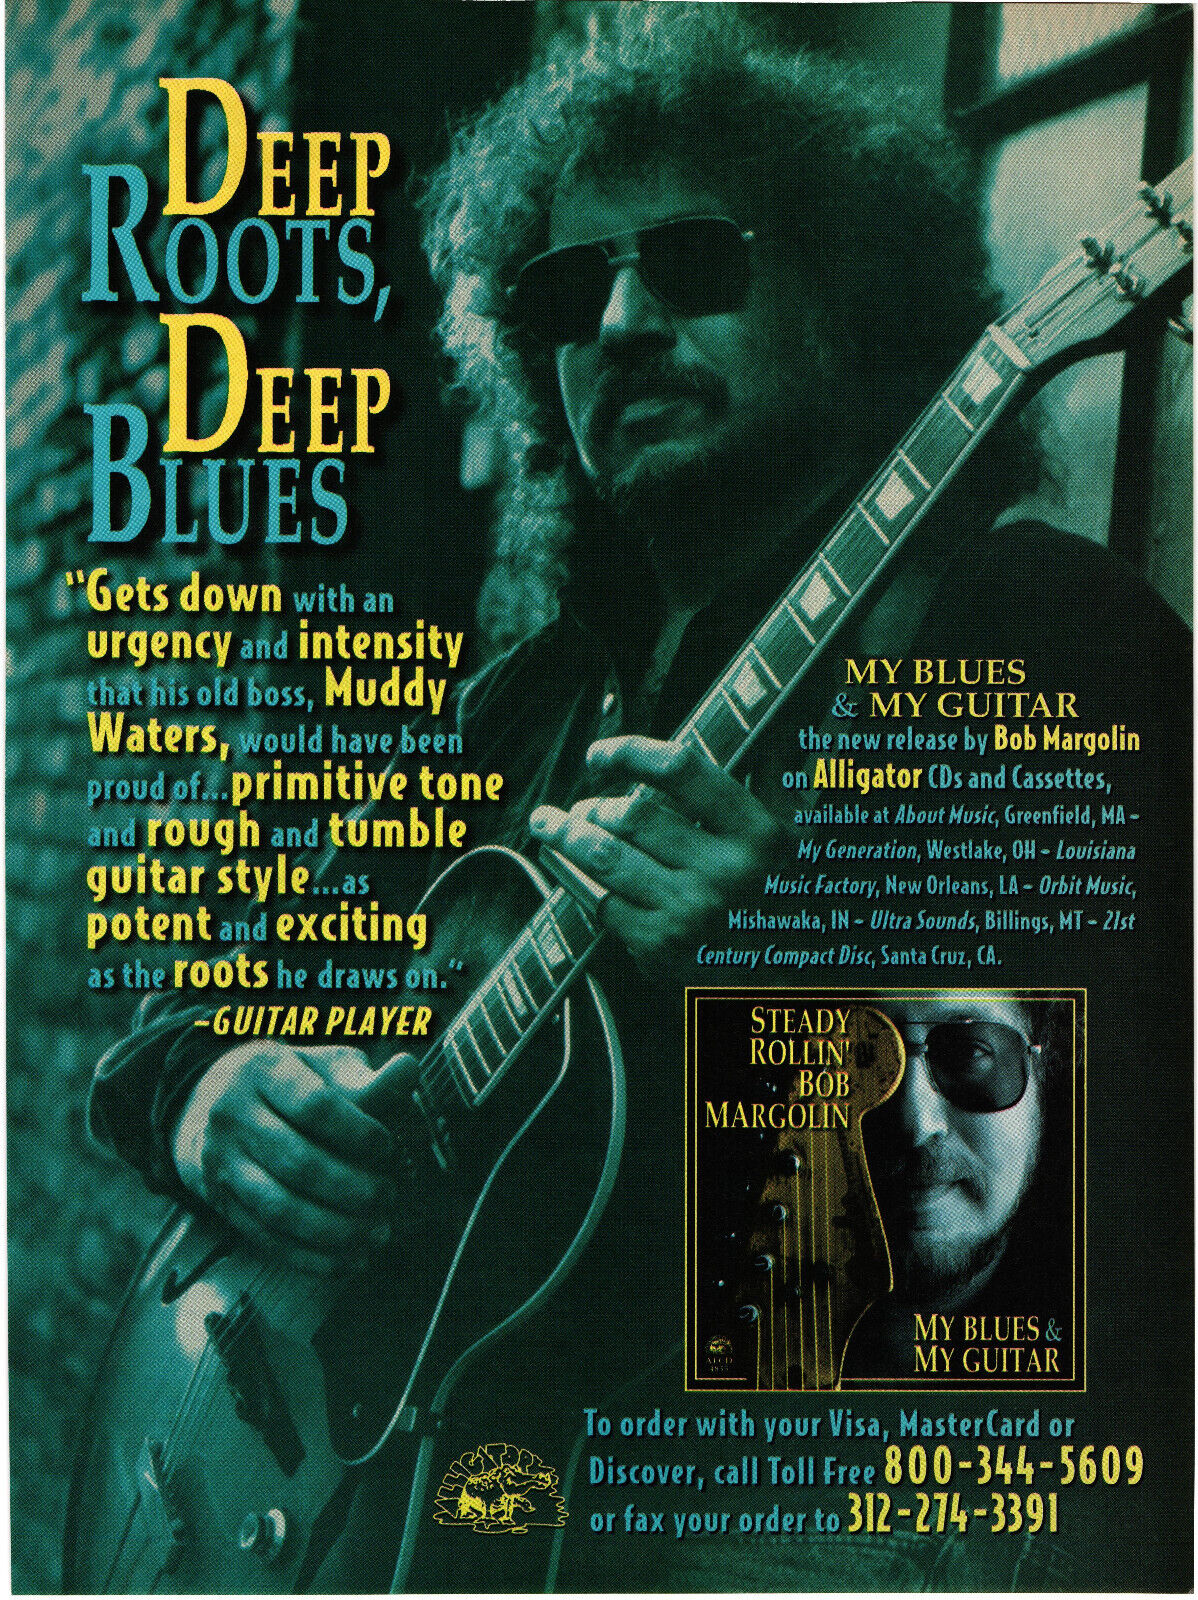 Steady Rollin' Bob Margolin - My Blues & My Guitar Album Print Advertisement